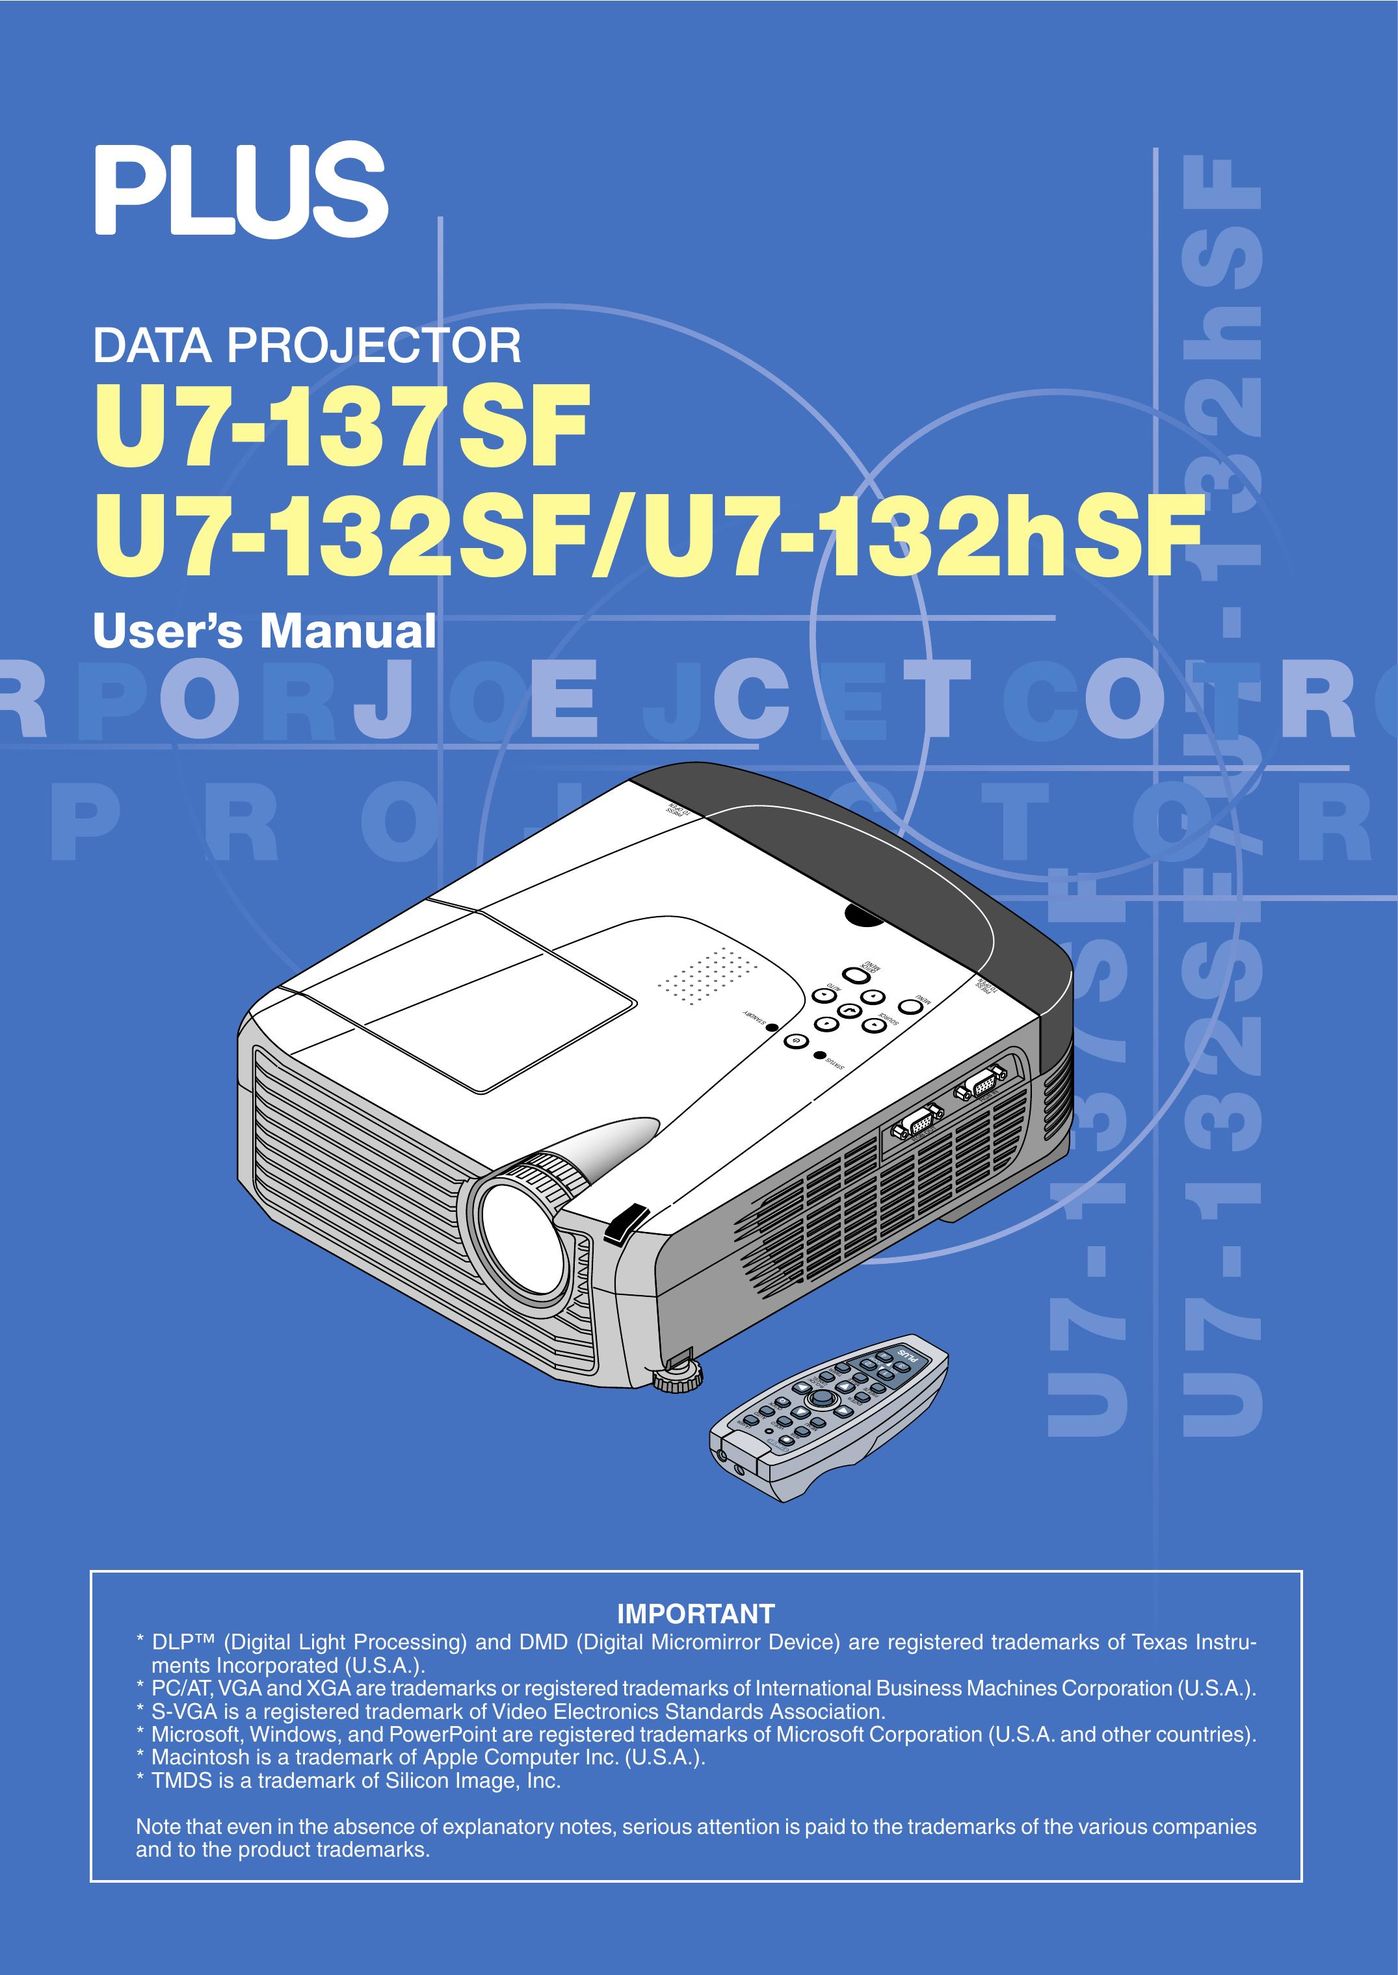 PLUS Vision U7-132SF Projector User Manual